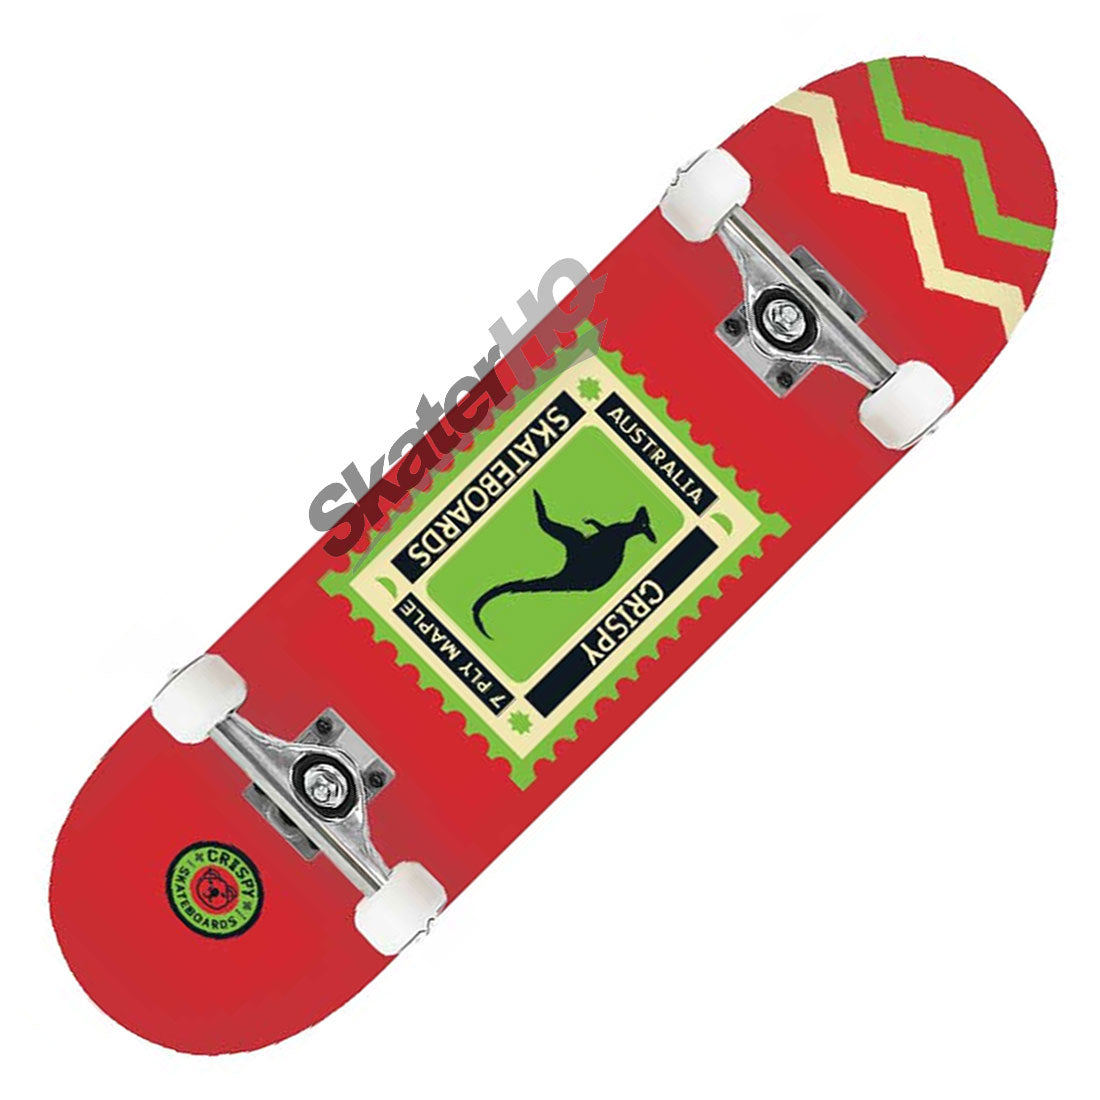 Crispy Rookie Roo 7.75 Complete - Red Skateboard Completes Modern Street